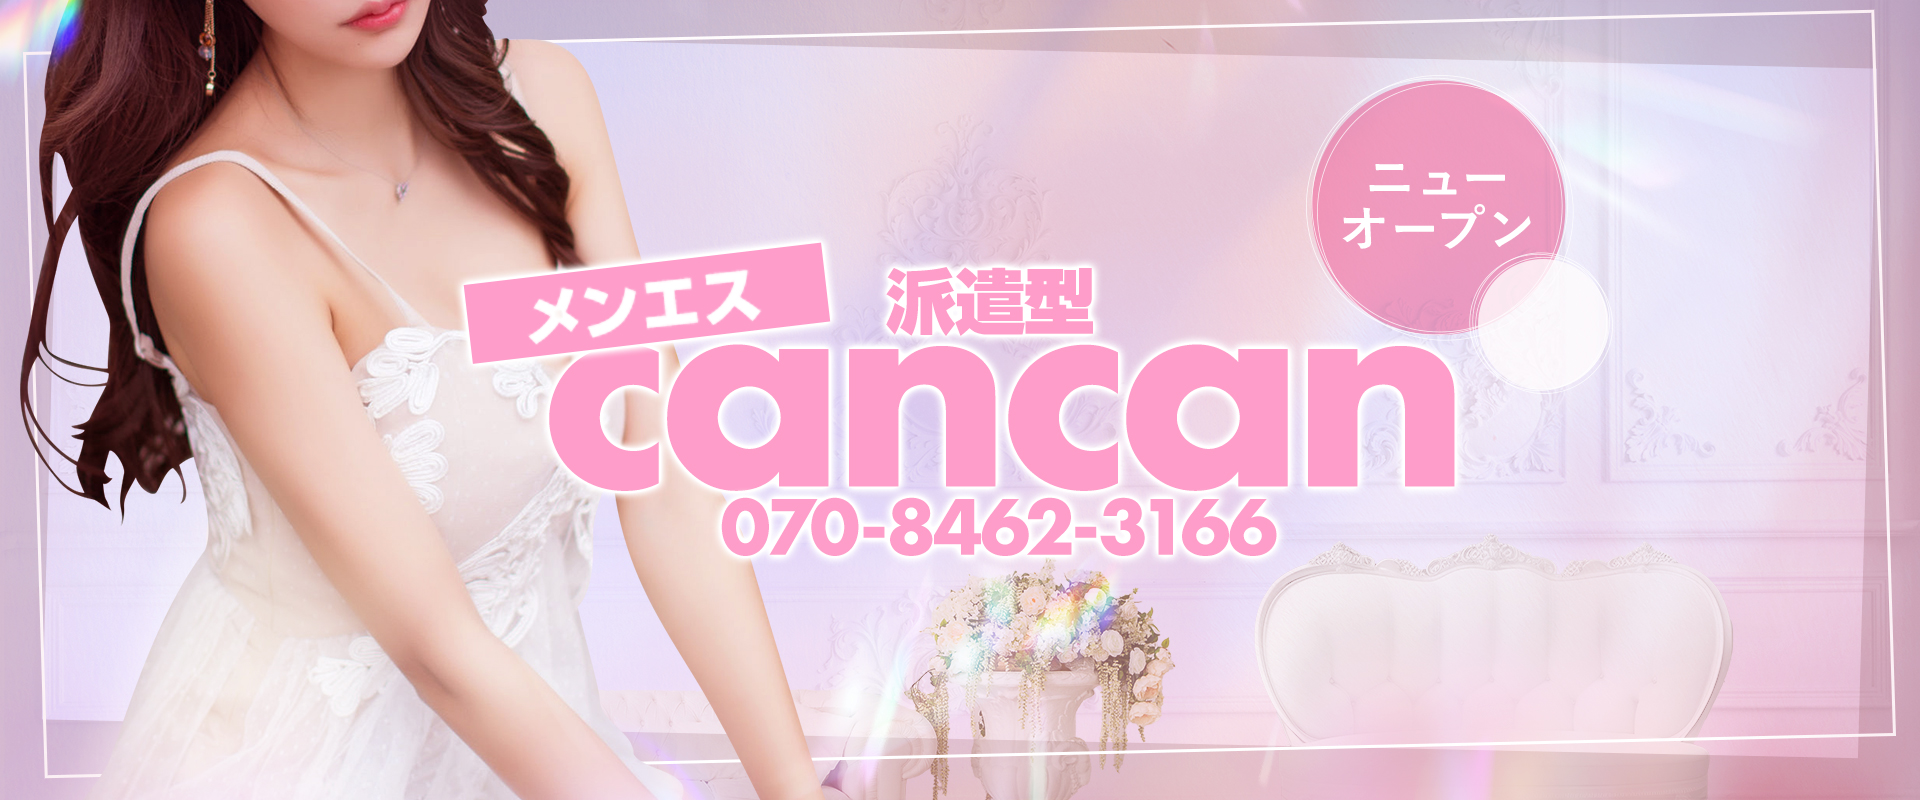 CanCan_top